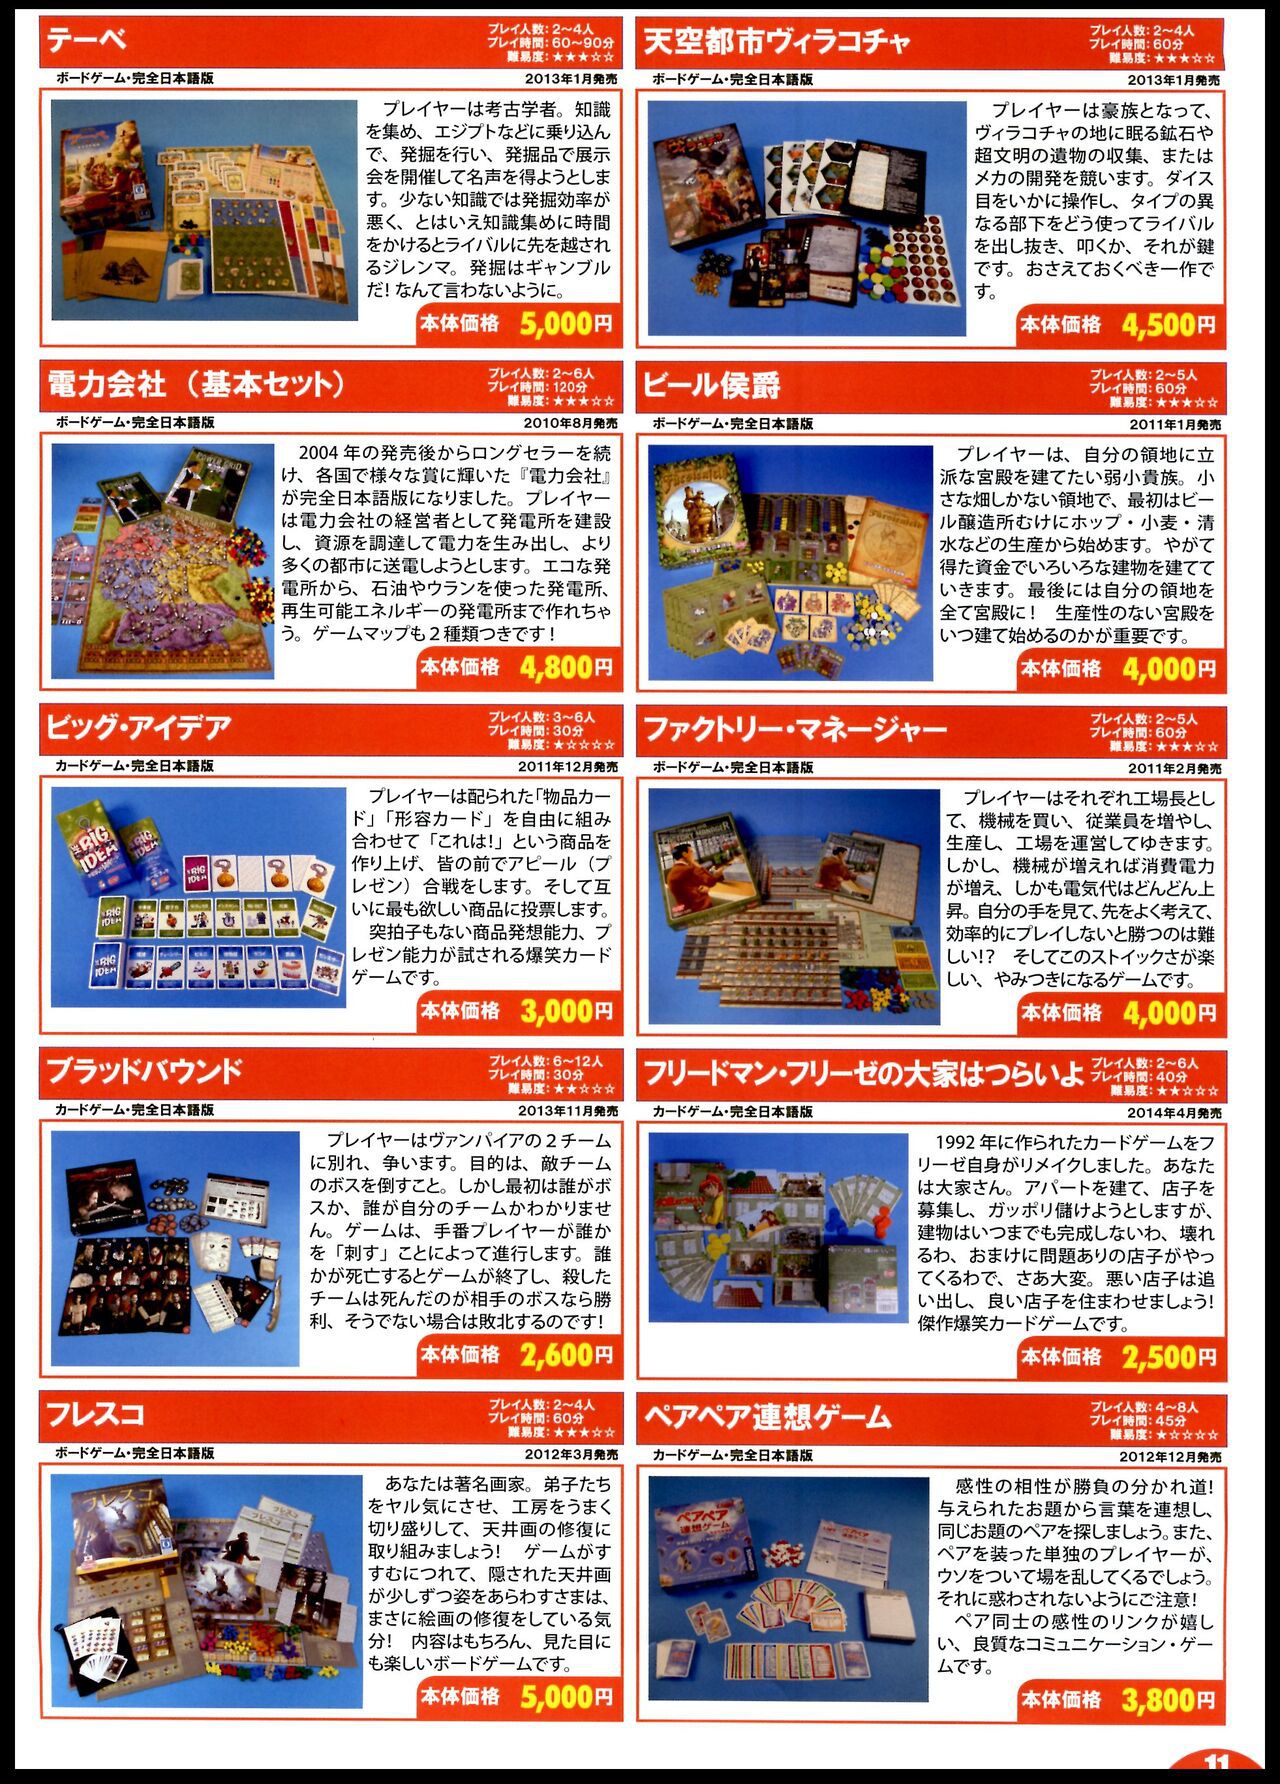 [Arclight Games] Board game catalog 2014 Summer - Autumn [アークライト] ボードゲームカタログ 2014 夏-秋 11